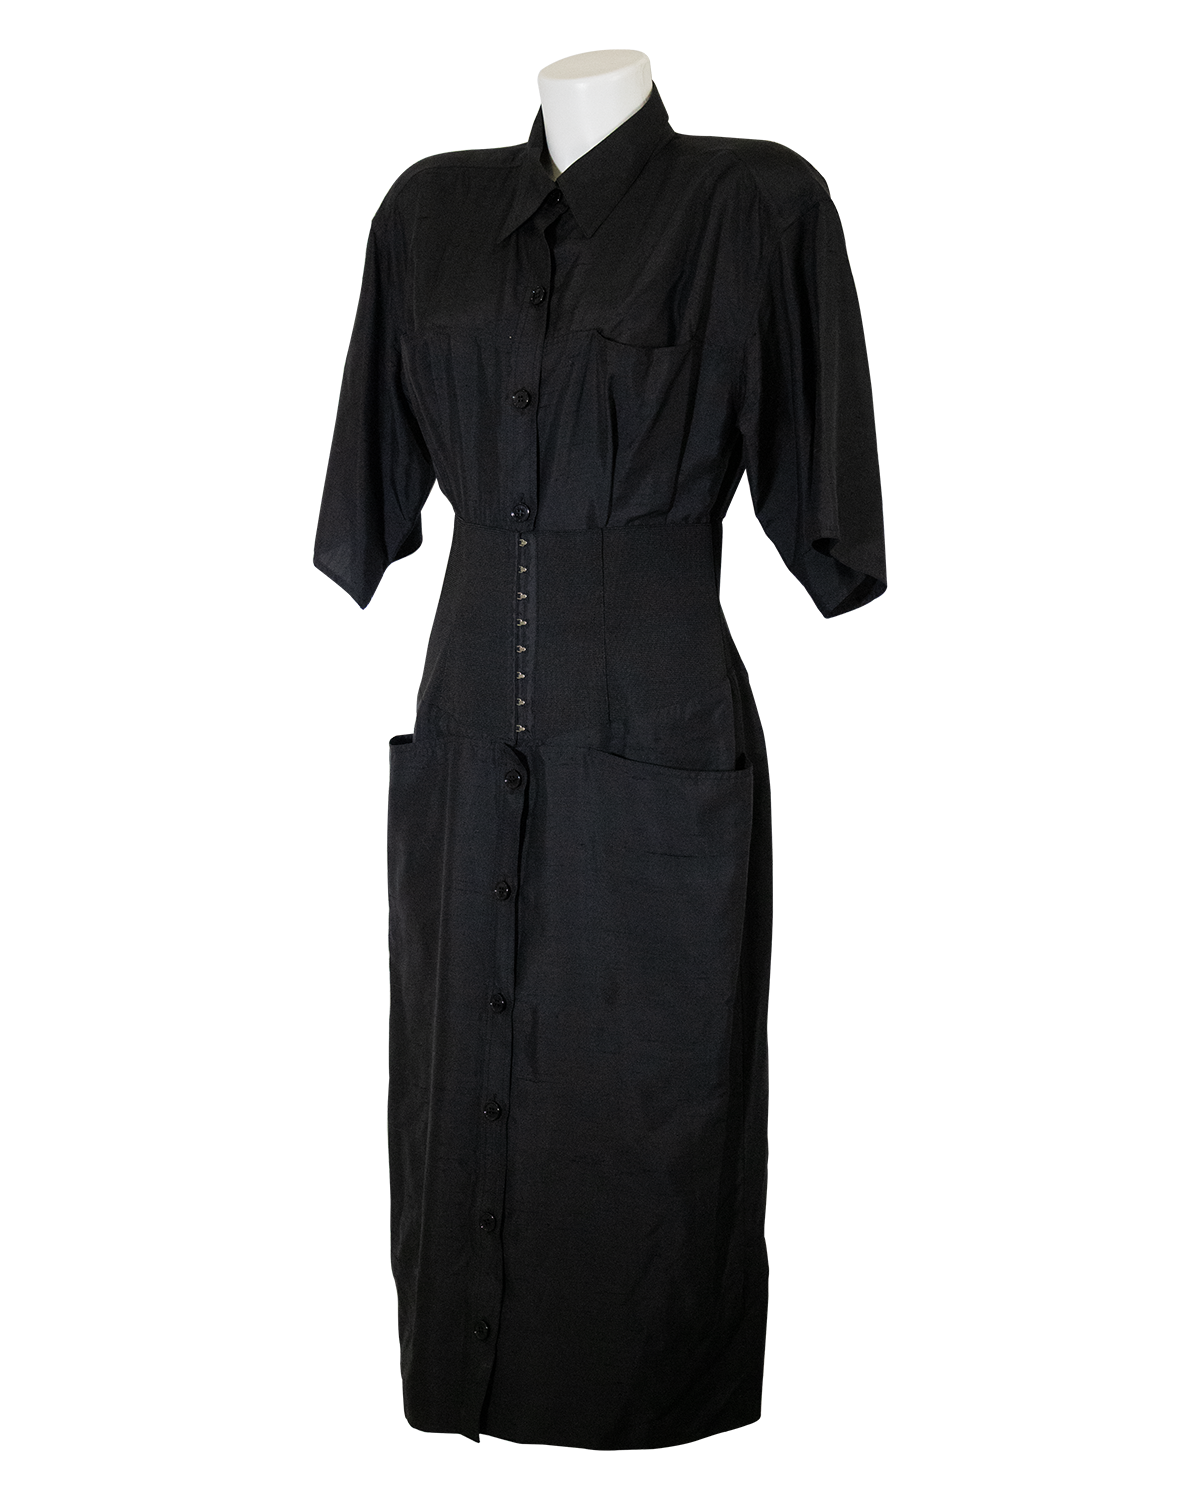 Gianfranco Ferré black dress with bustier SS1995